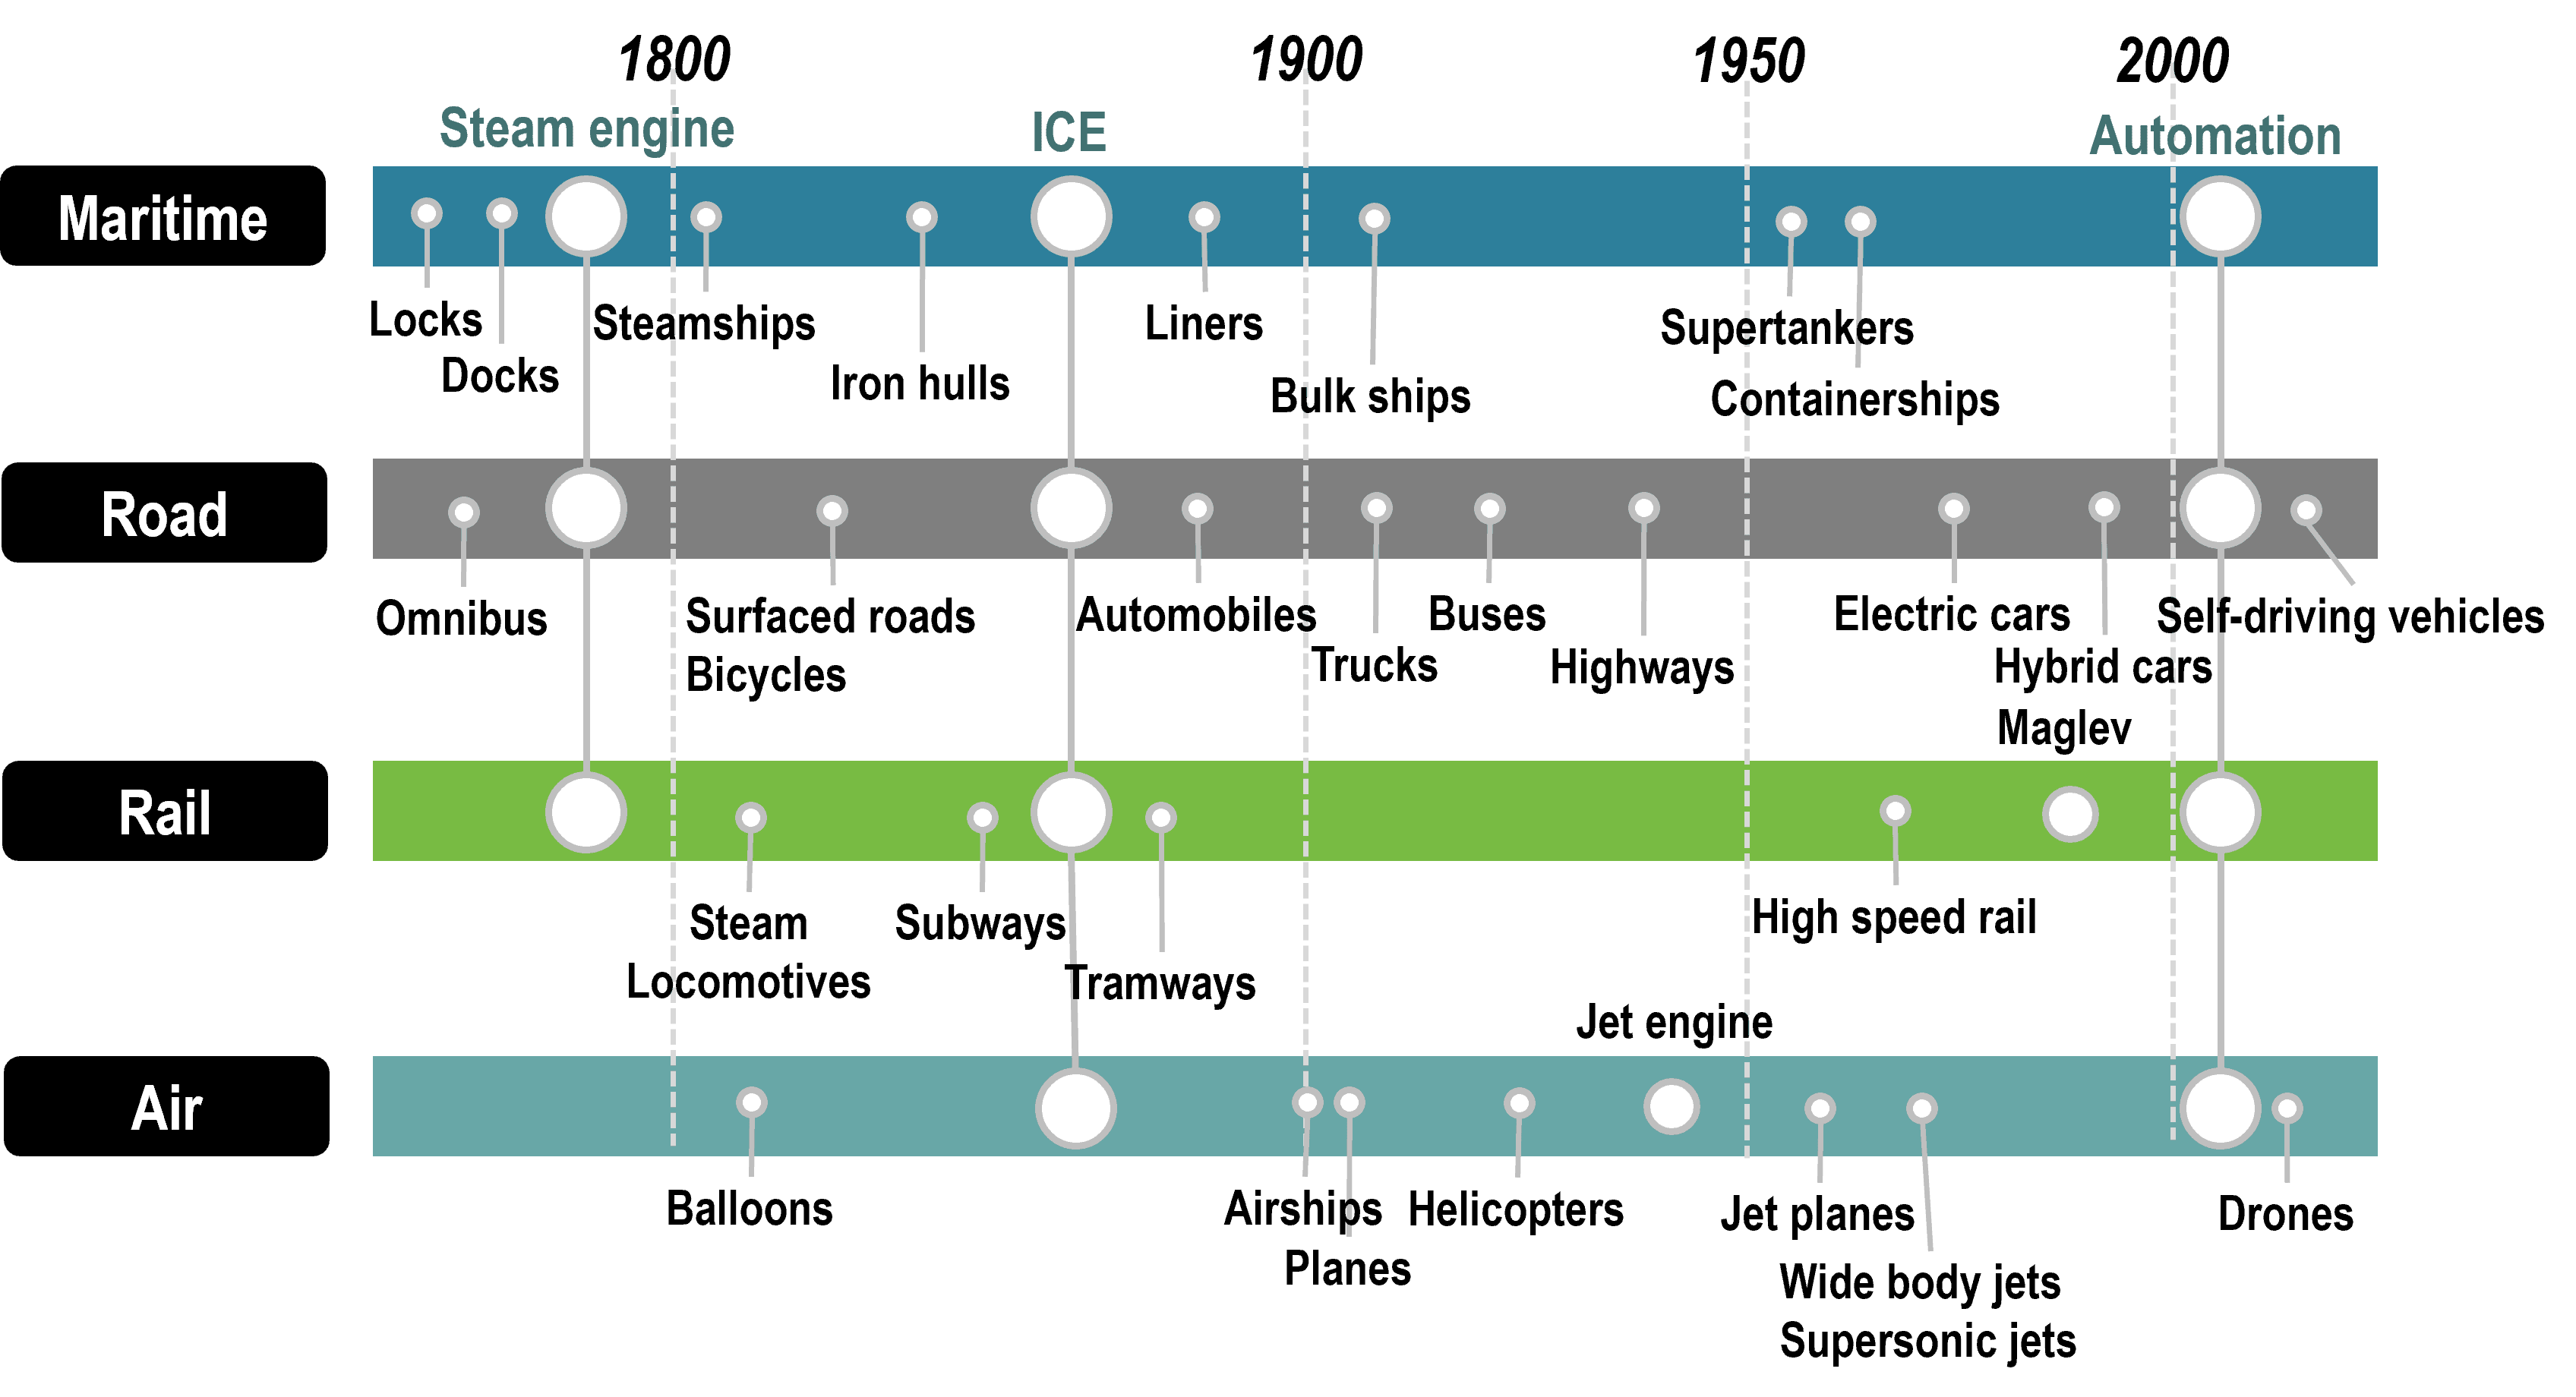 evolution of land transportation